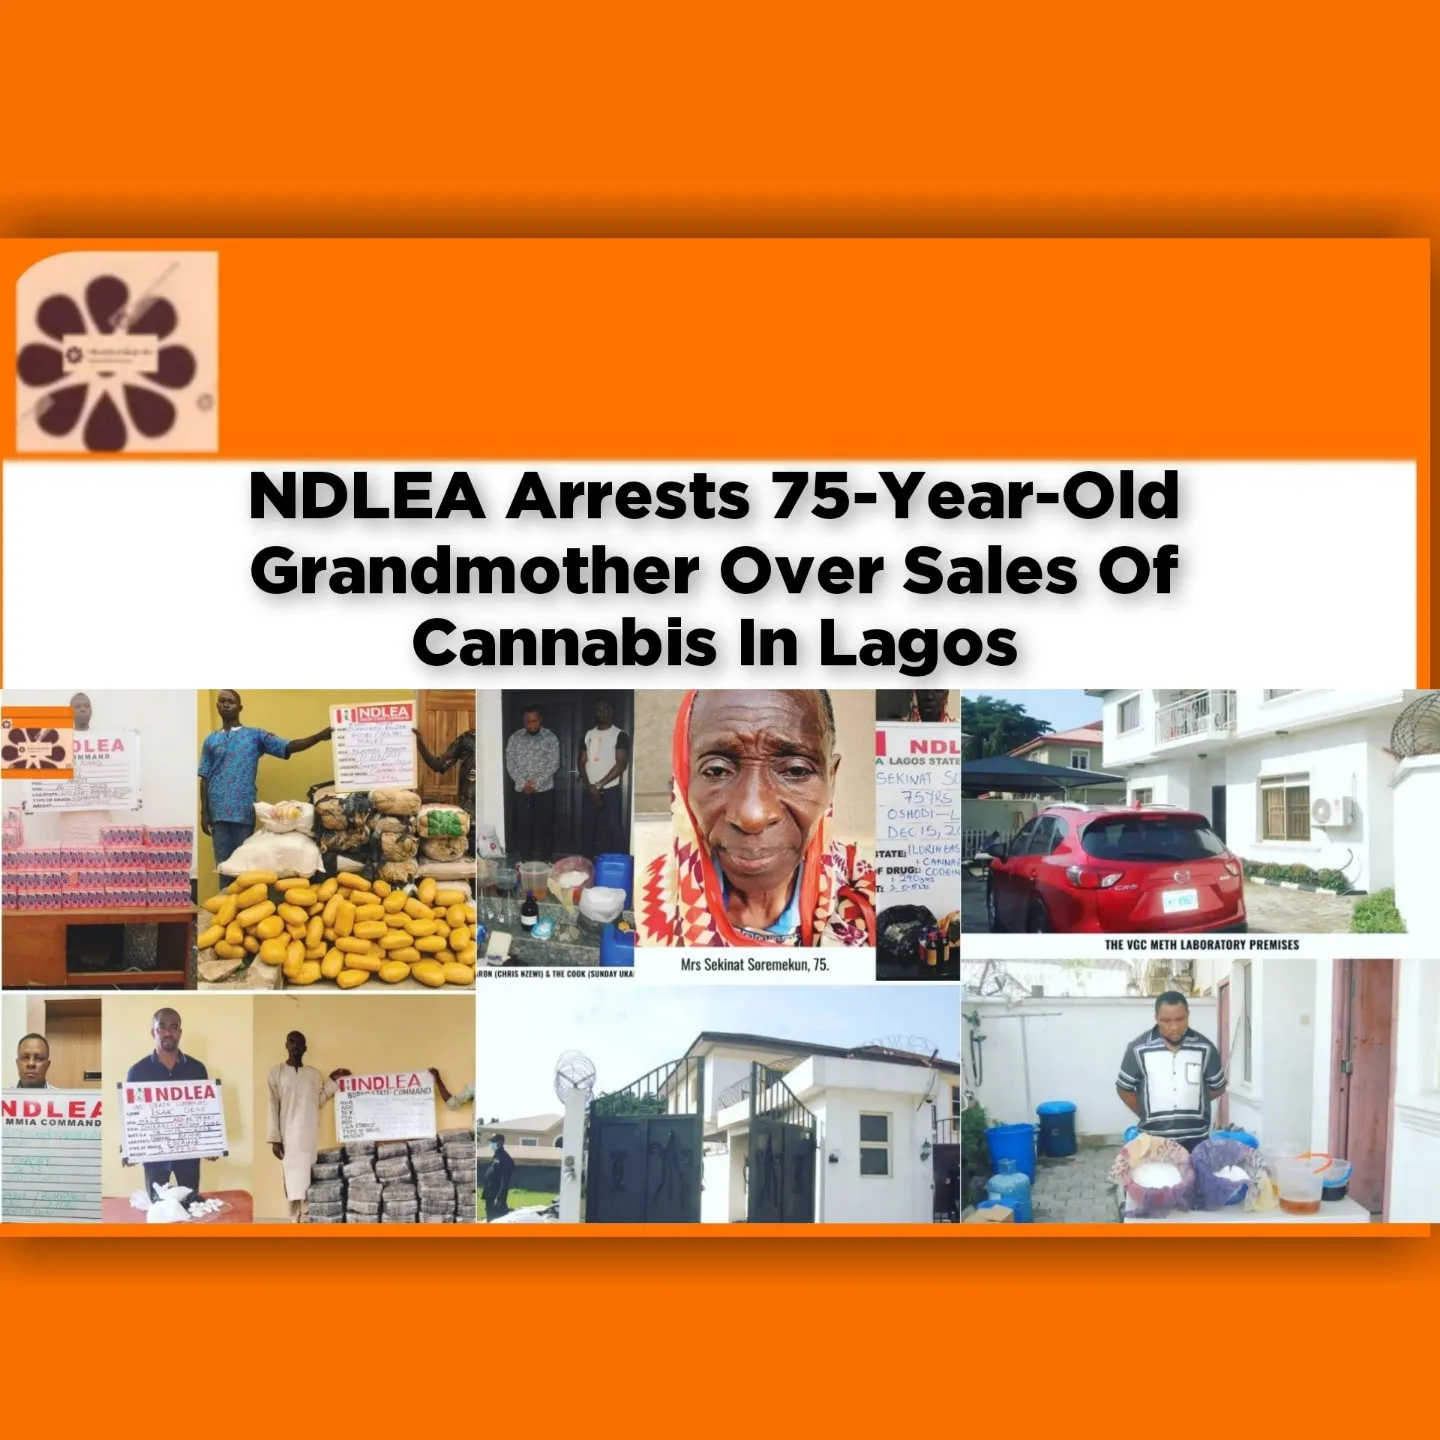 NDLEA Arrests 75-Year-Old Grandmother Over Sales Of Cannabis In Lagos ~ OsazuwaAkonedo #cannabis #Grandma #Lagos #NDLEA #OsazuwaAkonedo